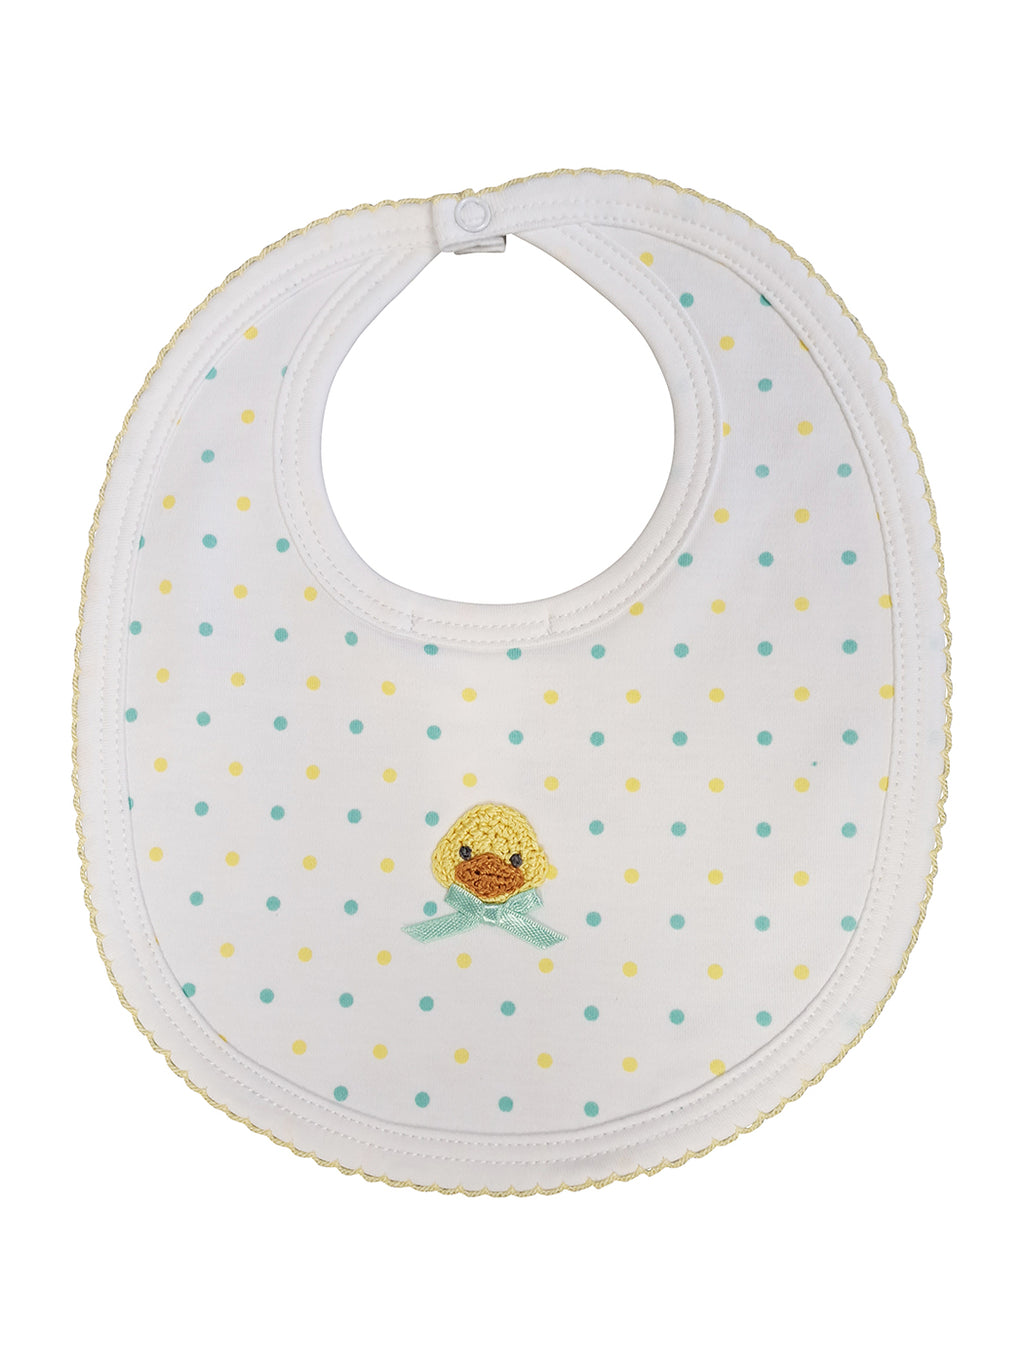 Ducky Polka Dots Baby's Bib - Little Threads Inc. Children's Clothing